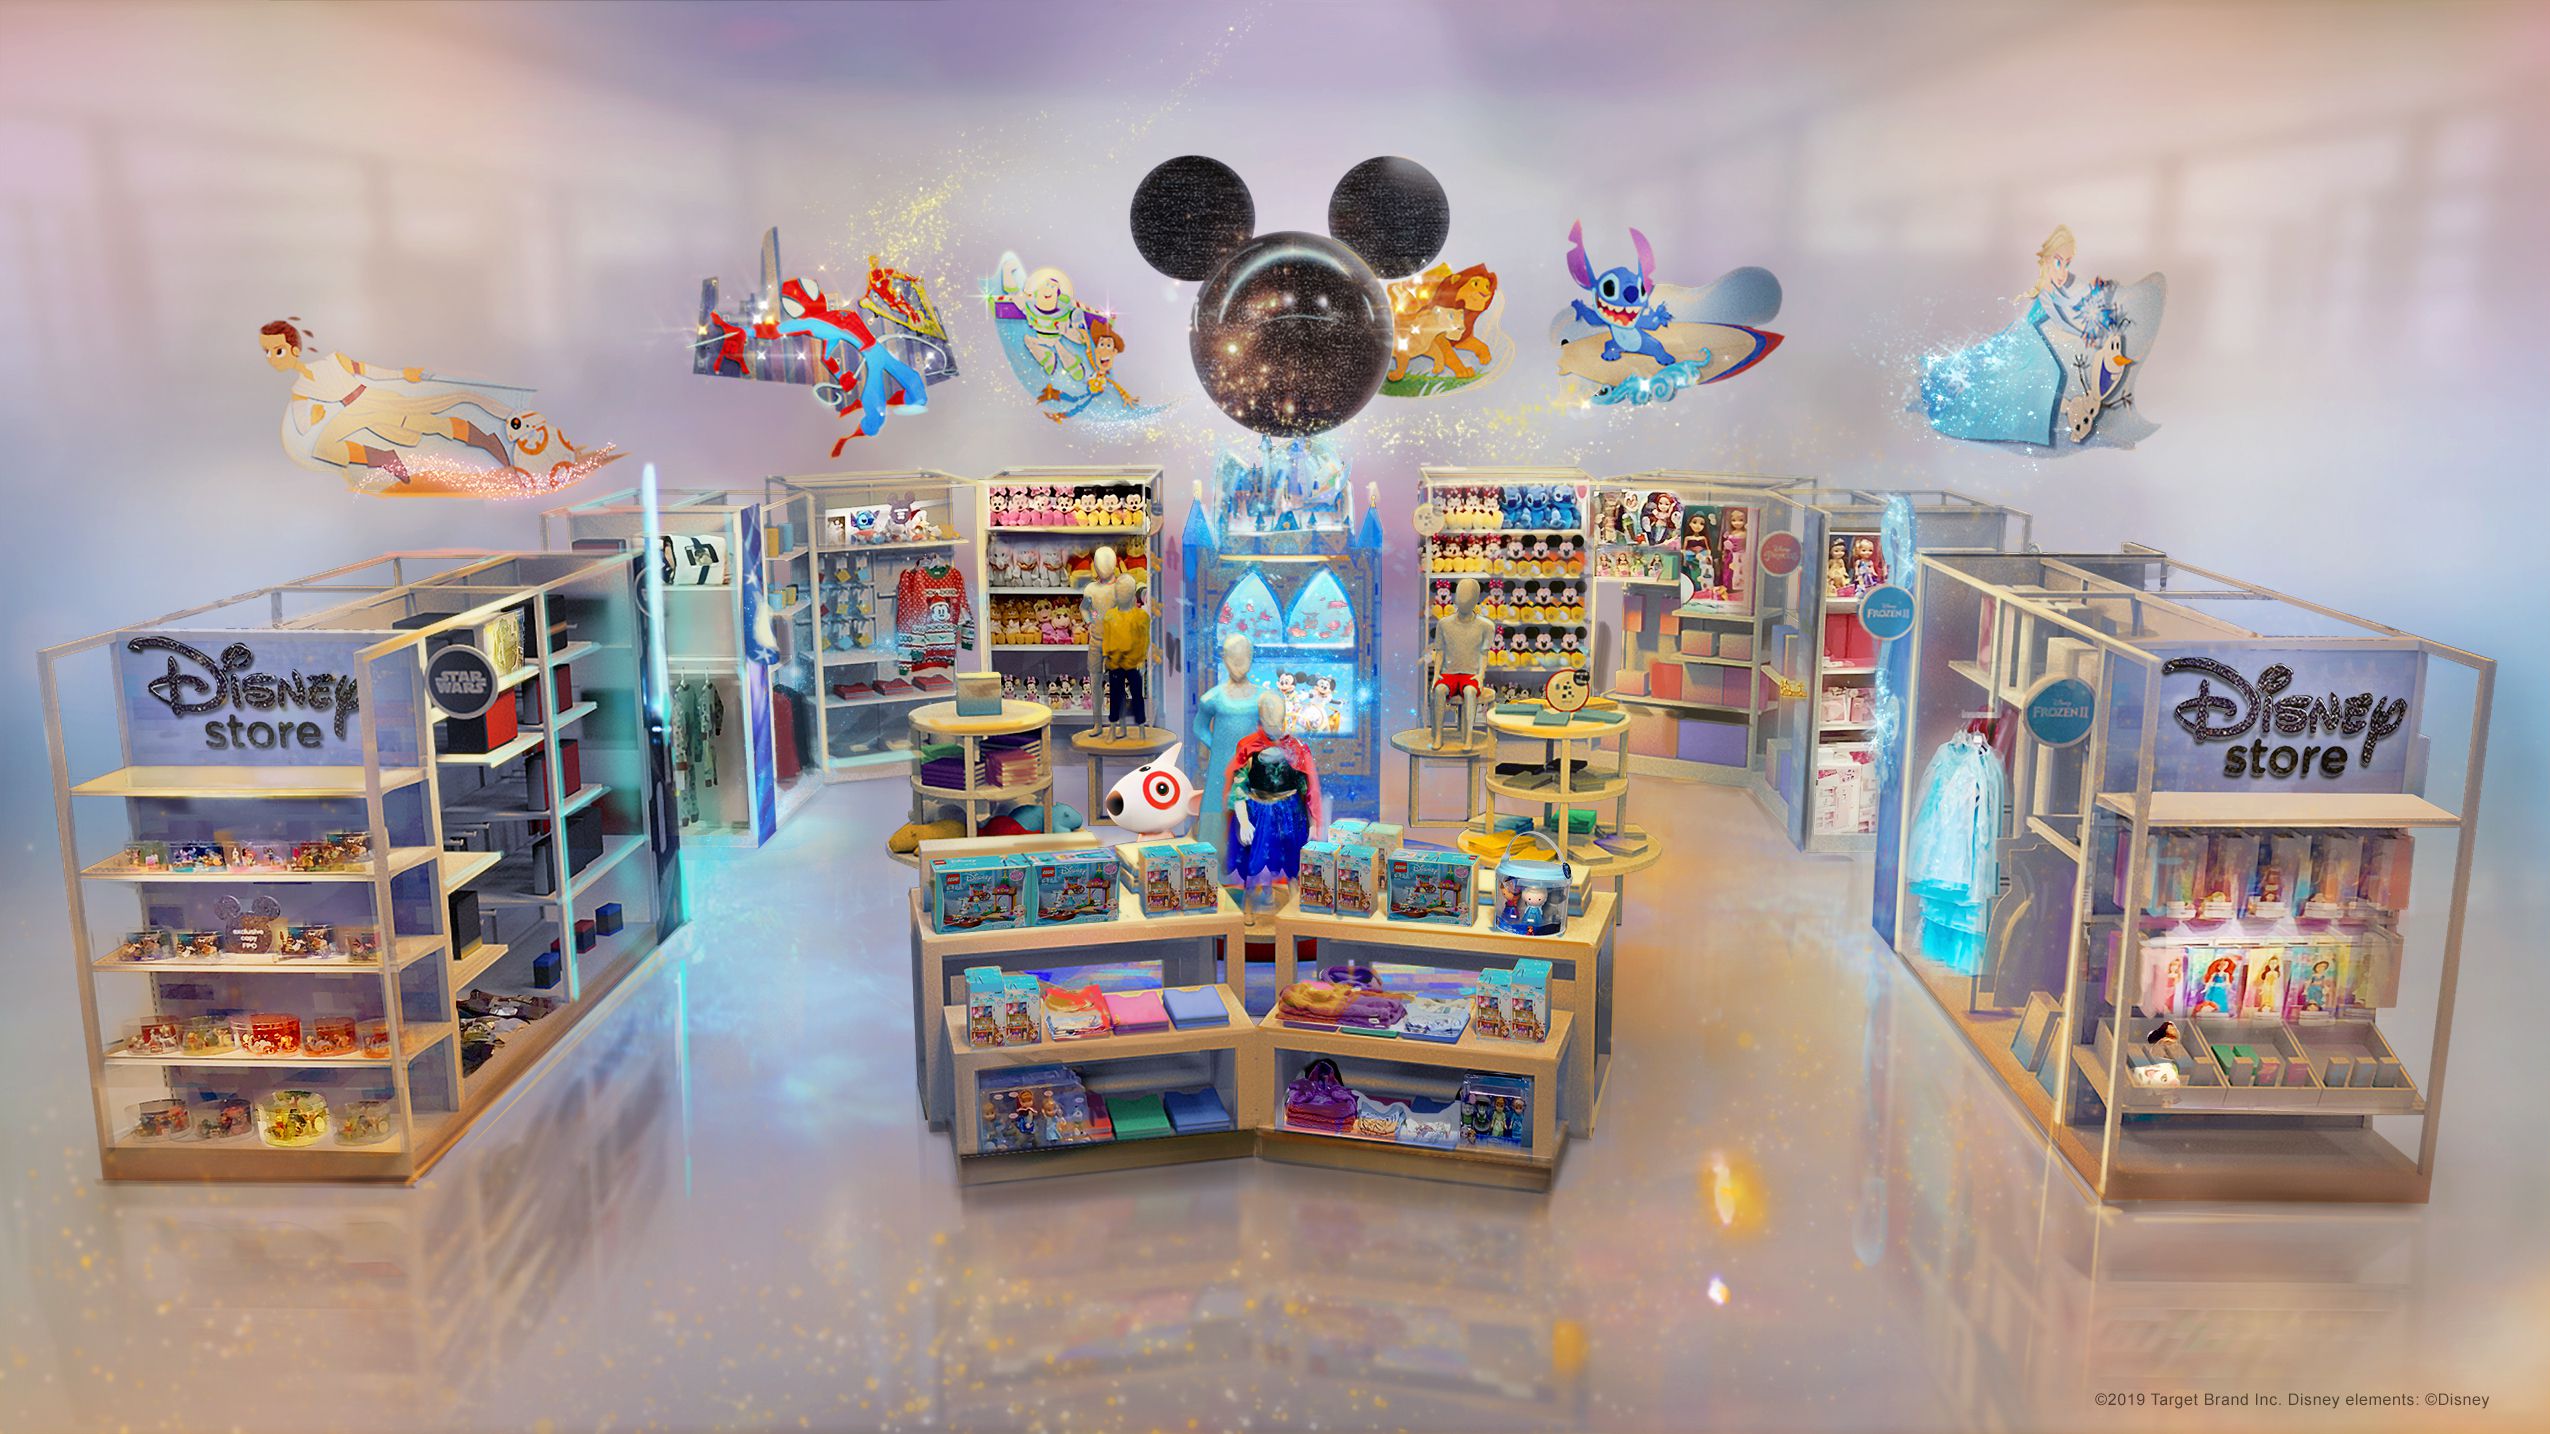 Mini-Disney Store opens inside South Jordan Target